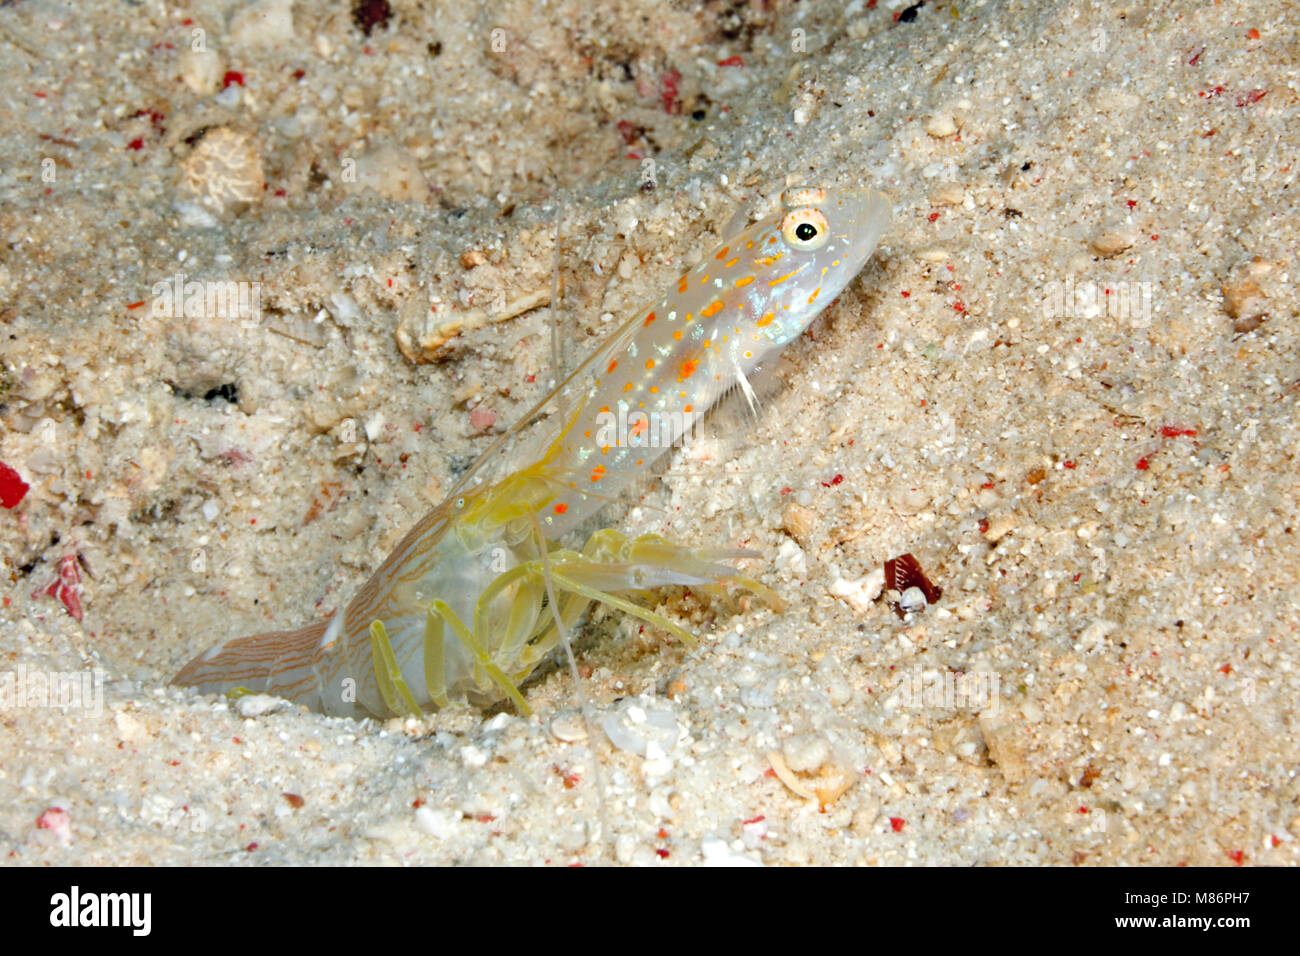 Masted Shrimpgoby, Ctenogobiops tangaroai and Alpheid Shrimp, Alpheus ochrostriatus. Stock Photo